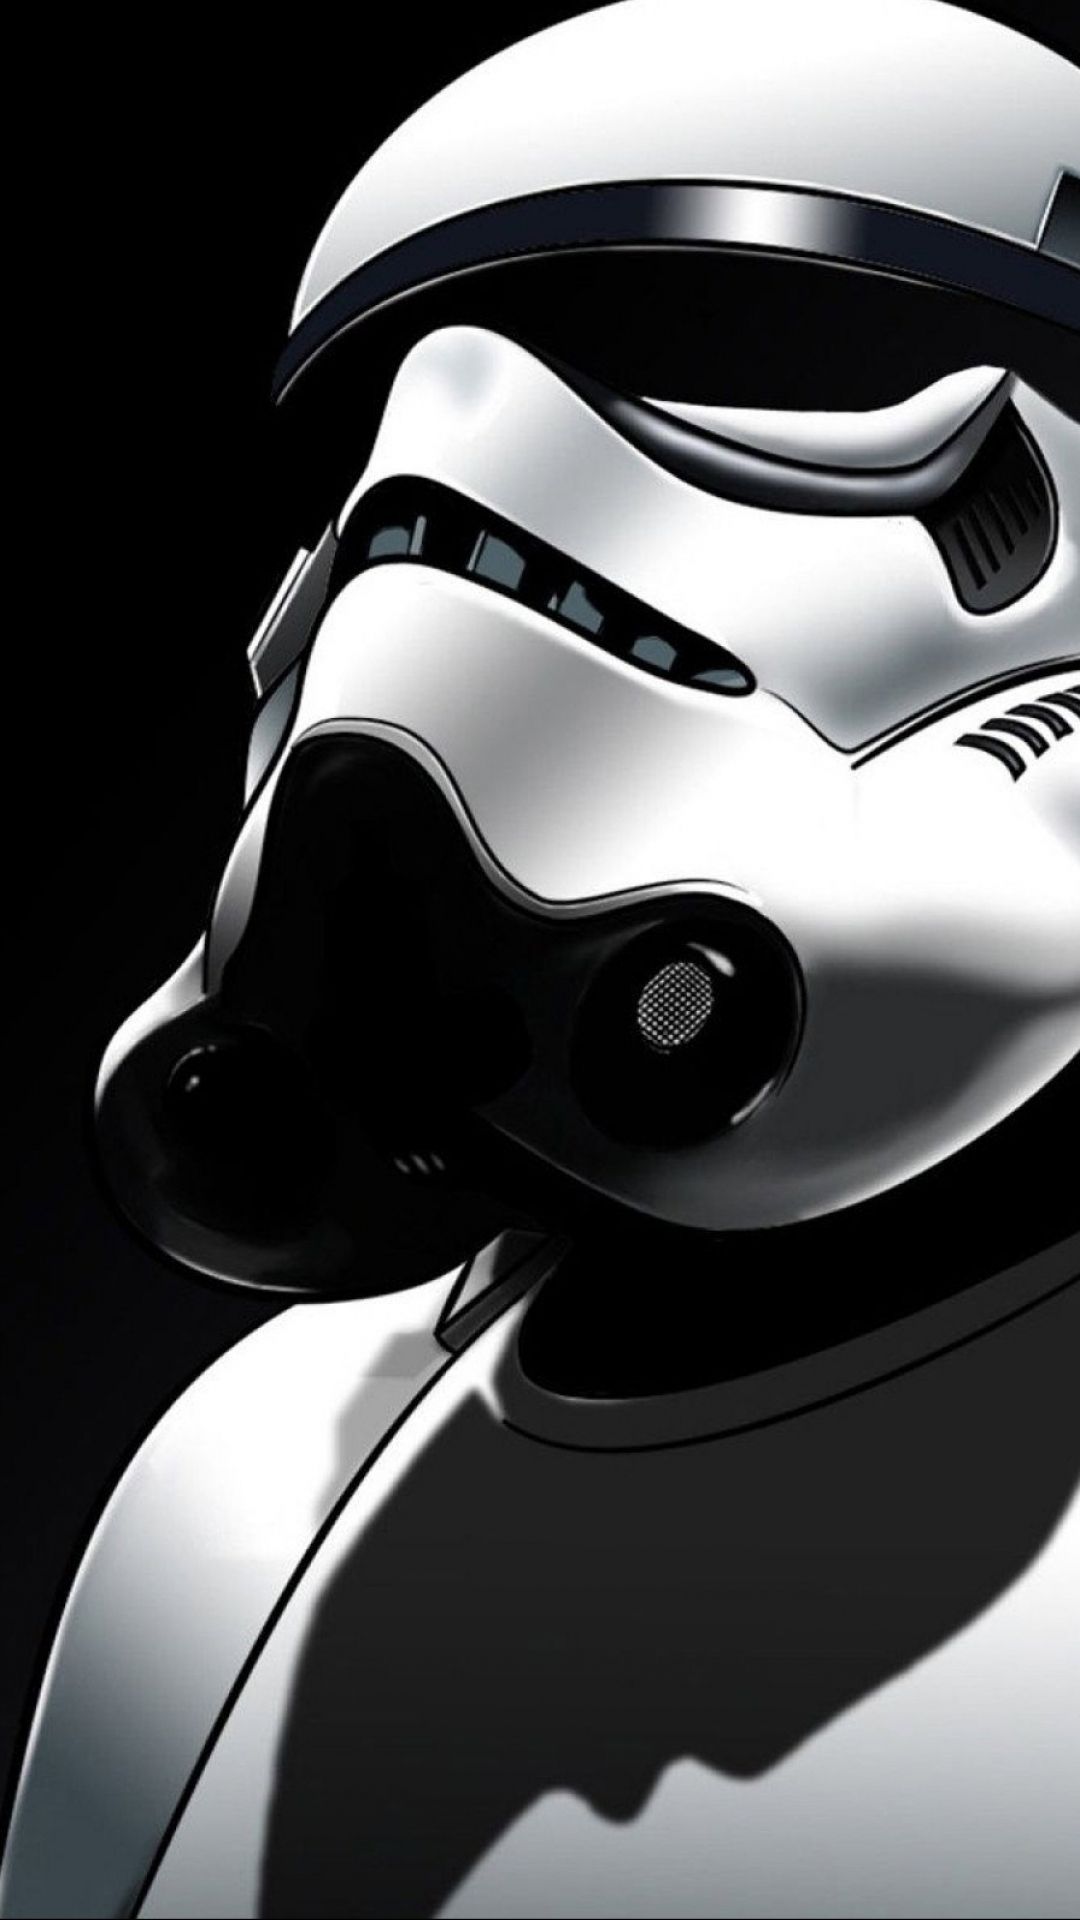 Darth Vader from Star Wars Mobile Wallpaper. Star wars wallpaper, Star wars stormtrooper, Star wars trooper